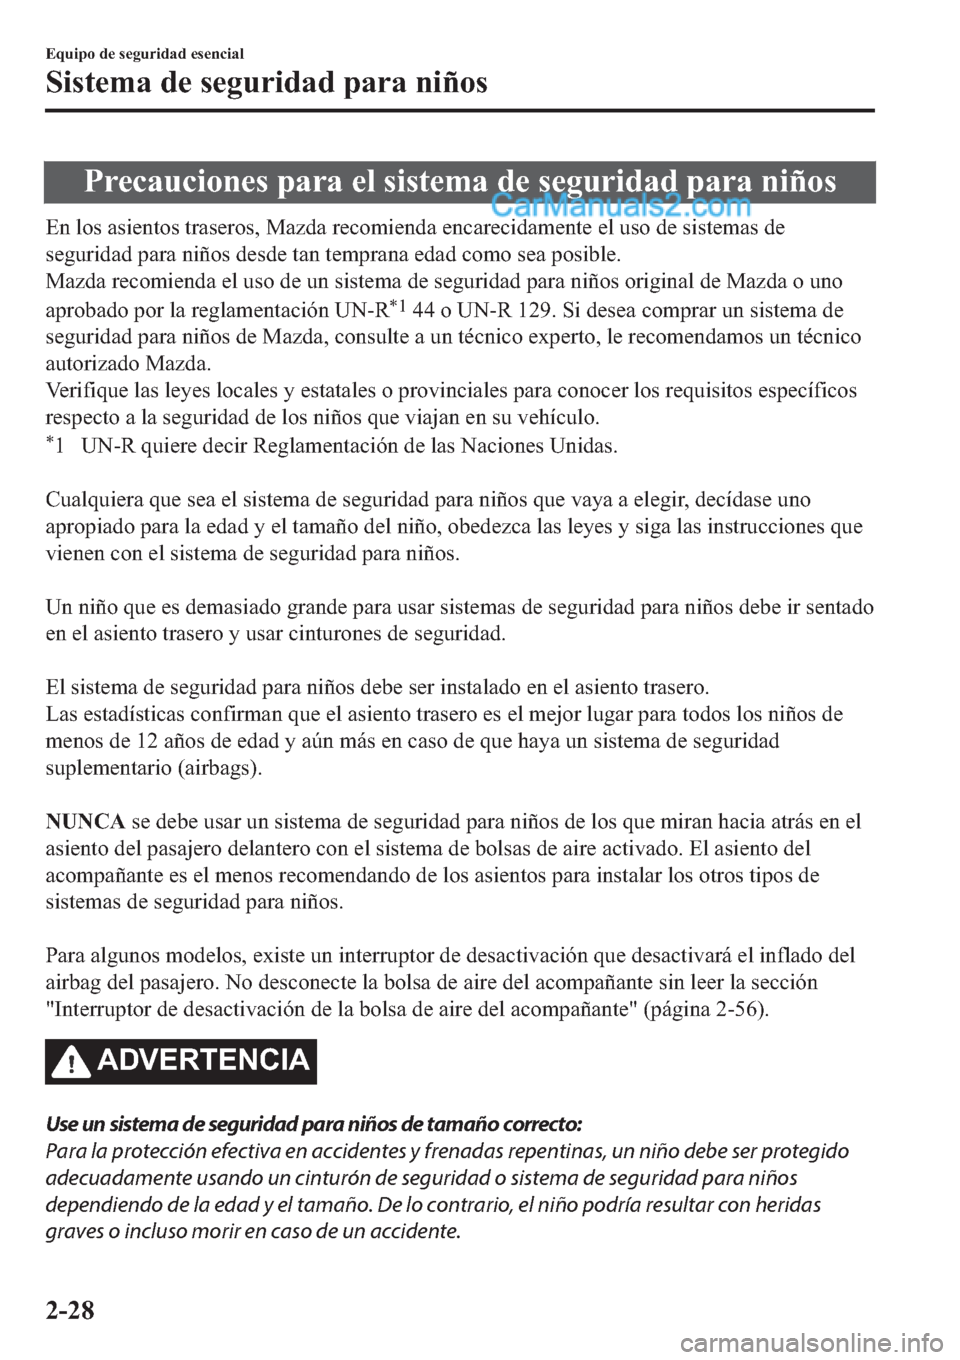 MAZDA MODEL 2 2019  Manual del propietario (in Spanish) �3�U�H�F�D�X�F�L�R�Q�H�V��S�D�U�D��H�O��V�L�V�W�H�P�D��G�H��V�H�J�X�U�L�G�D�G��S�D�U�D��Q�L�x�R�V
�(�Q��O�R�V��D�V�L�H�Q�W�R�V��W�U�D�V�H�U�R�V���0�D�]�G�D��U�H�F�R�P�L�H�Q�G�D��H�Q�F�D�